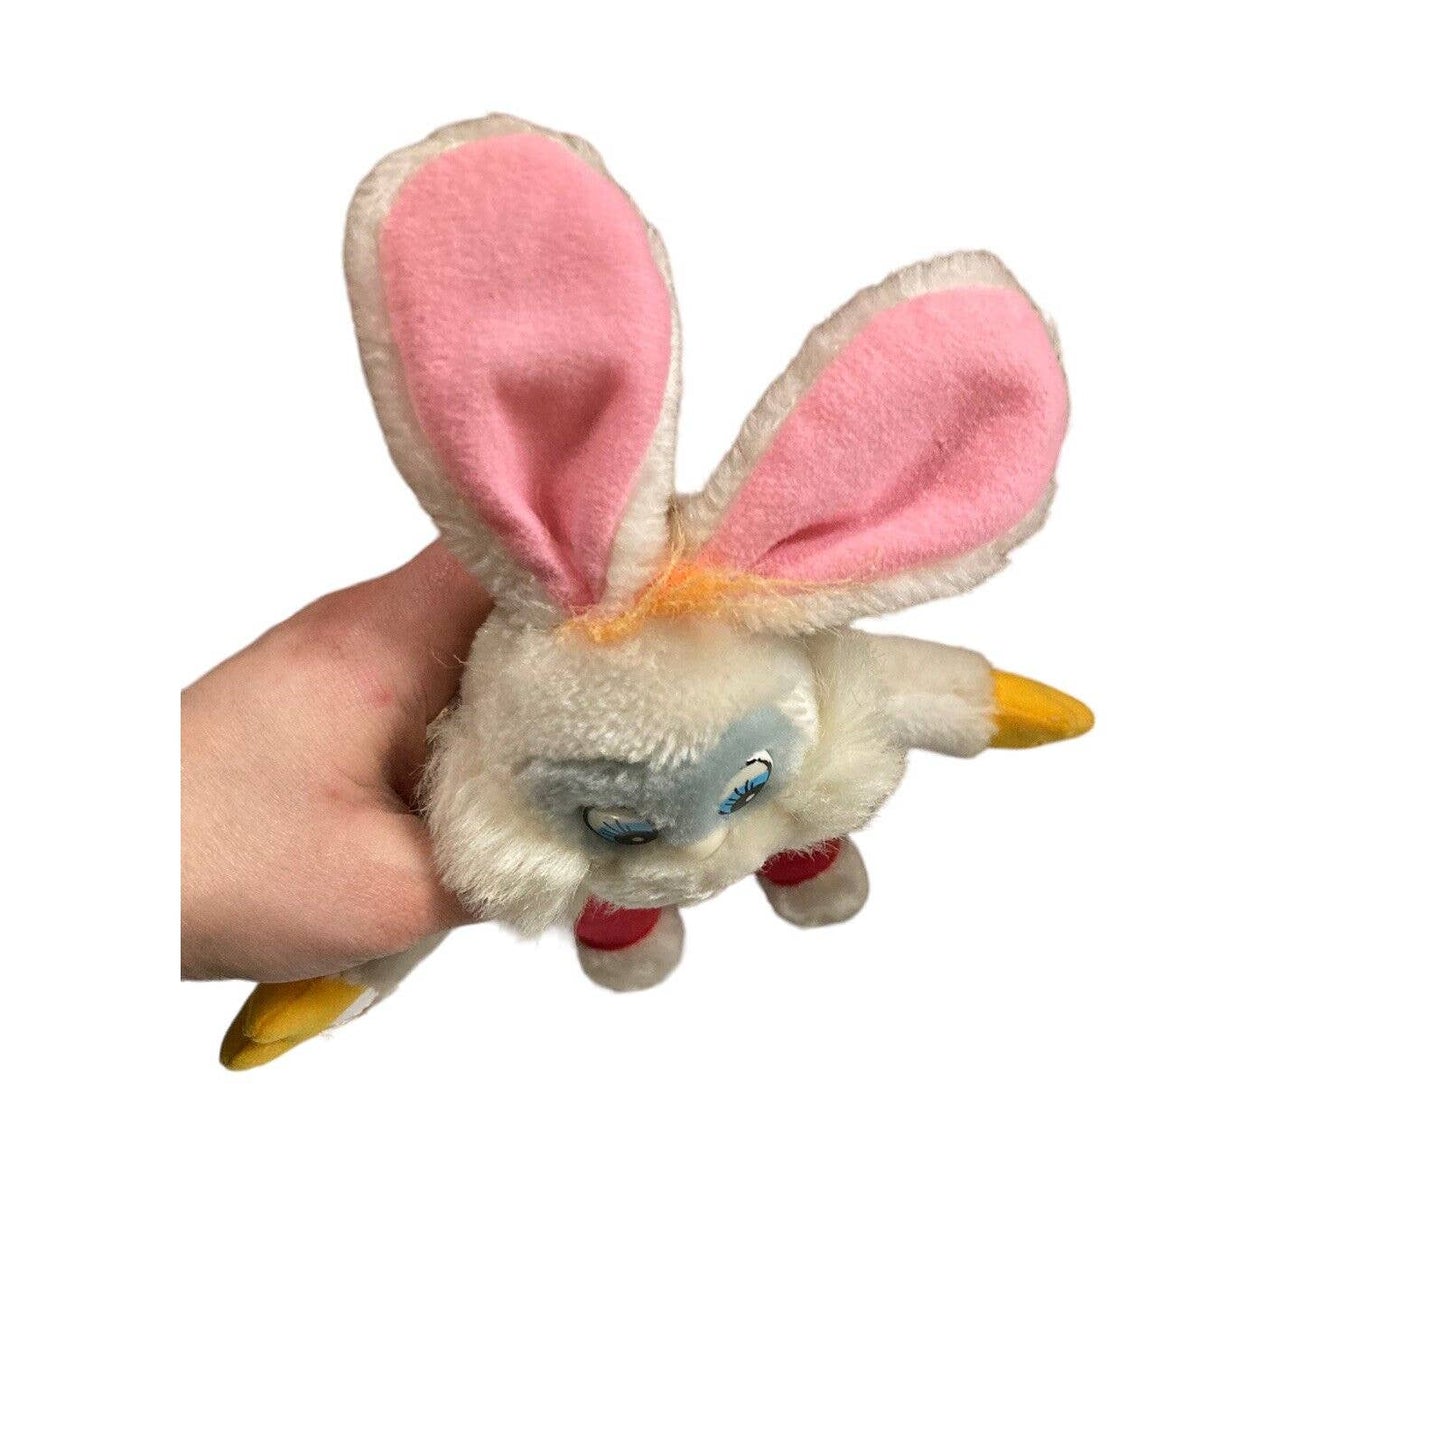 Disney Who Framed Roger Rabbit Vintage Stuffed Animal Plush Toy